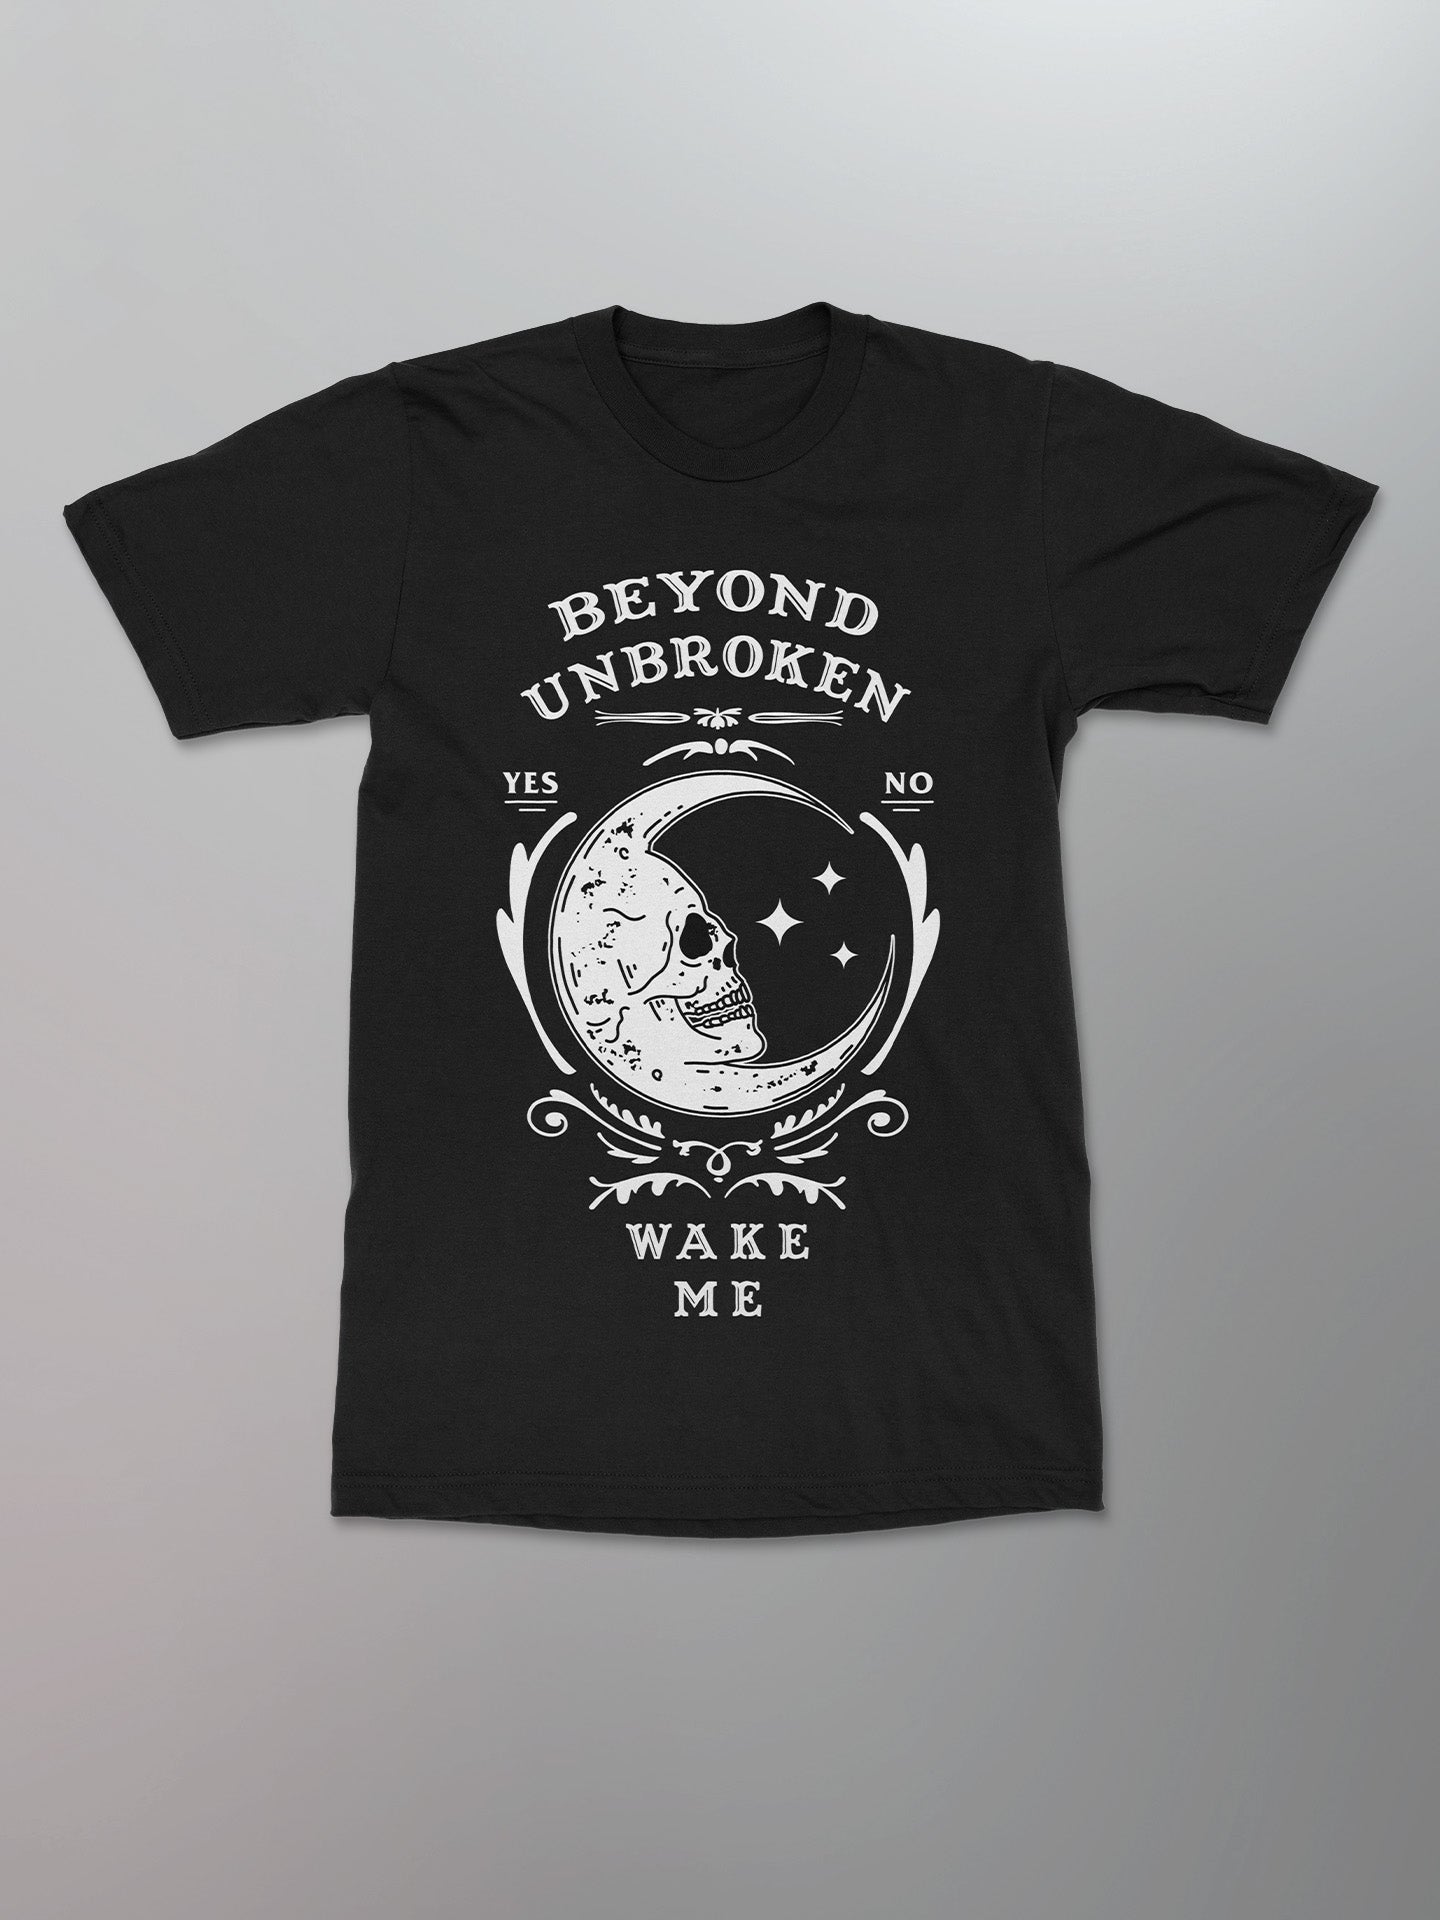 Beyond Unbroken - Wake Me Shirt